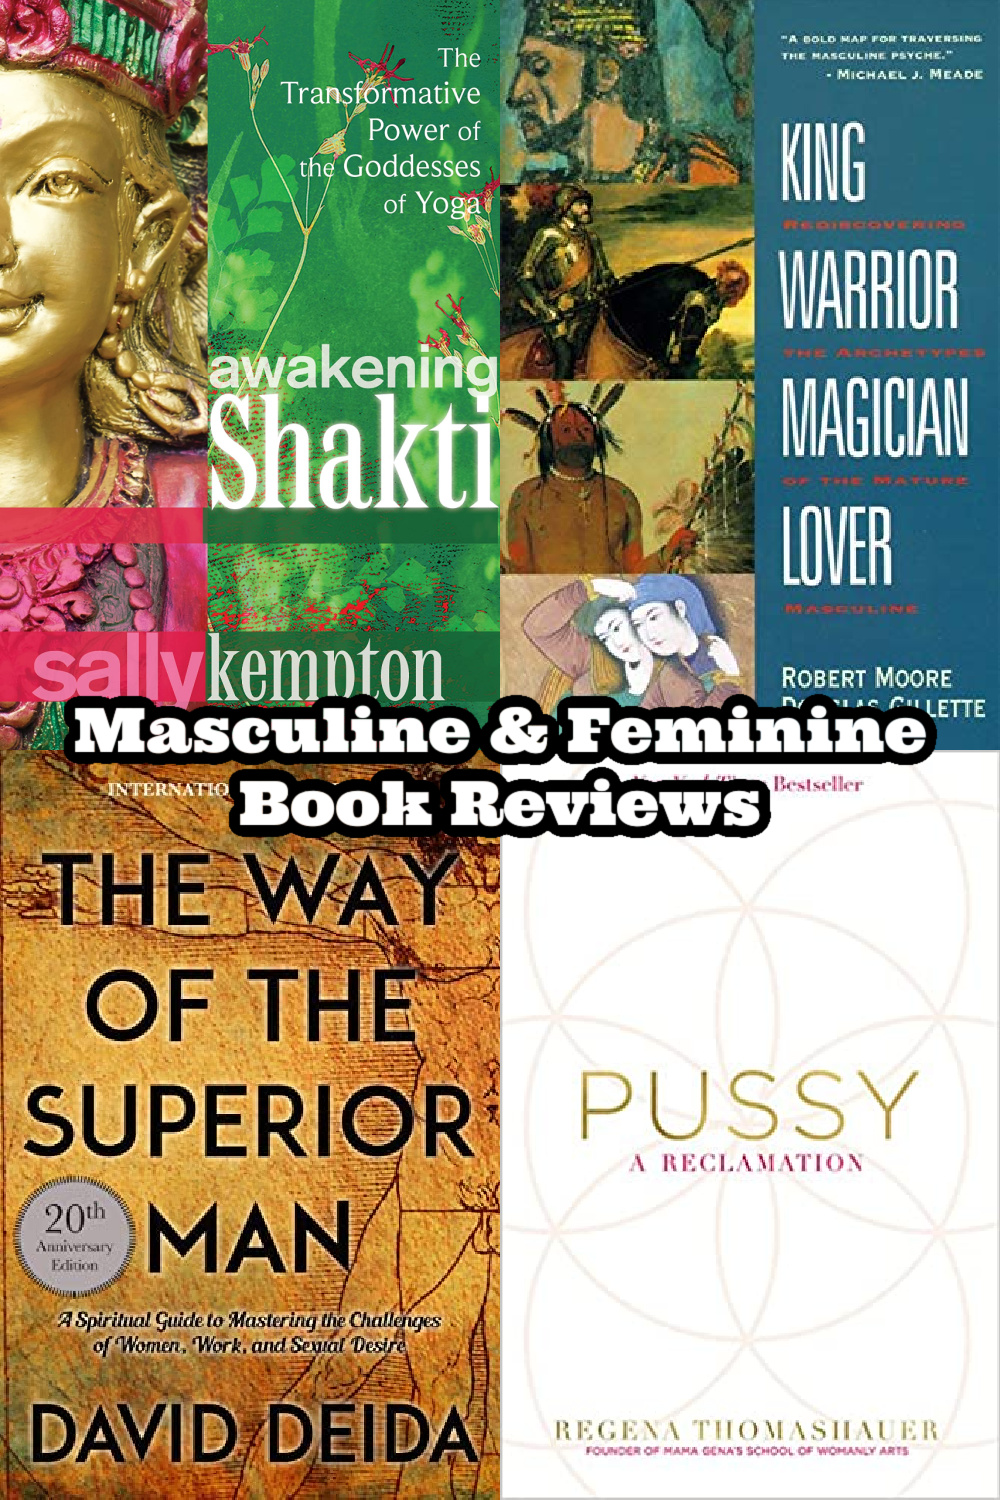 Feminine & Masculine Energy Book Reviews | David Deida, King Warrior Magician Lover, & More!